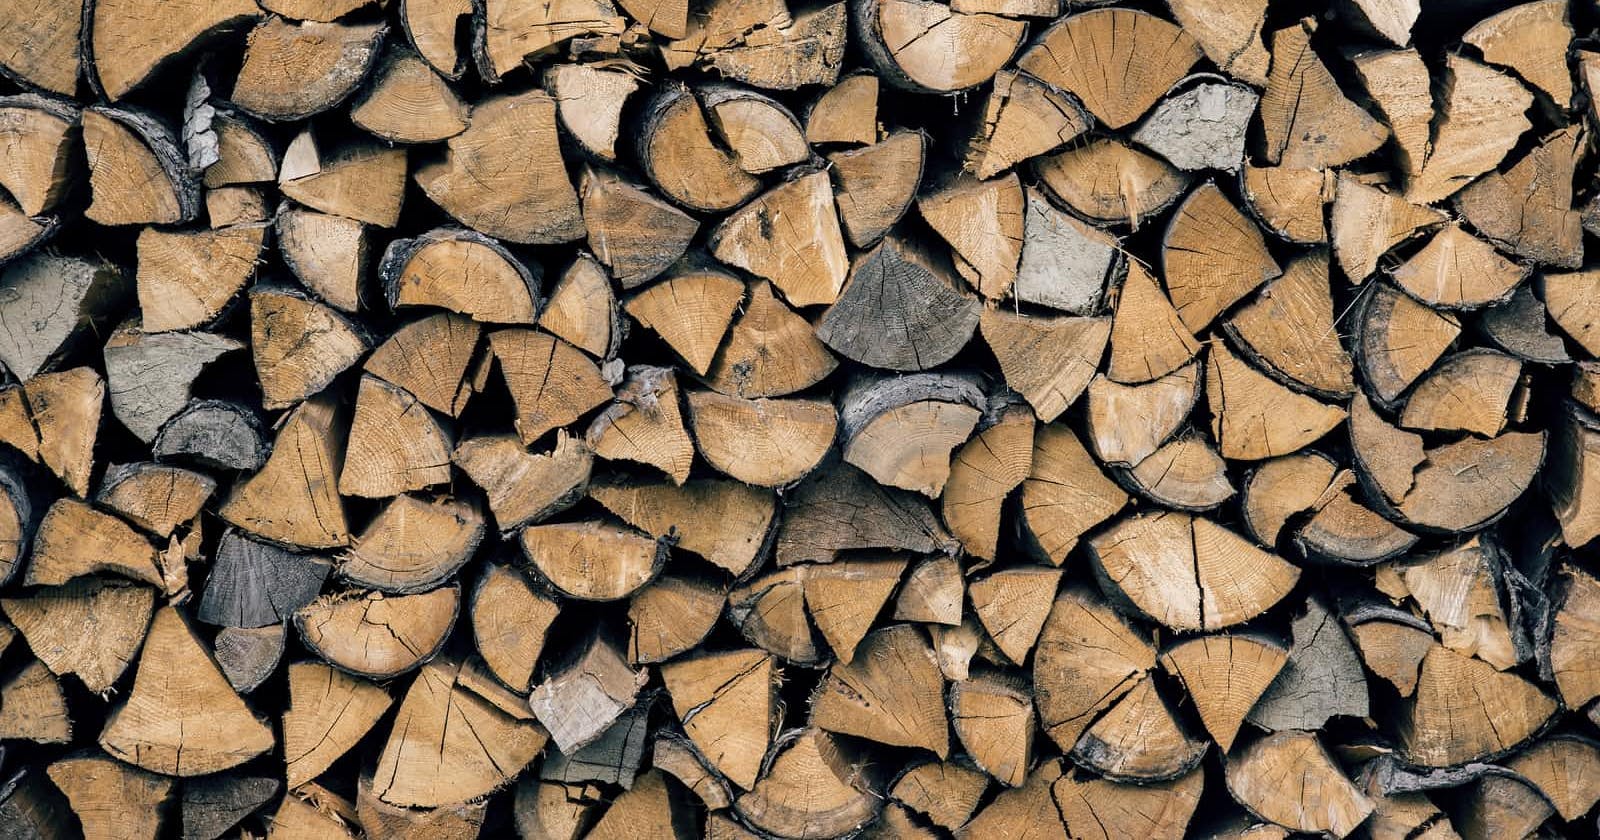 Logging best practices that I follow